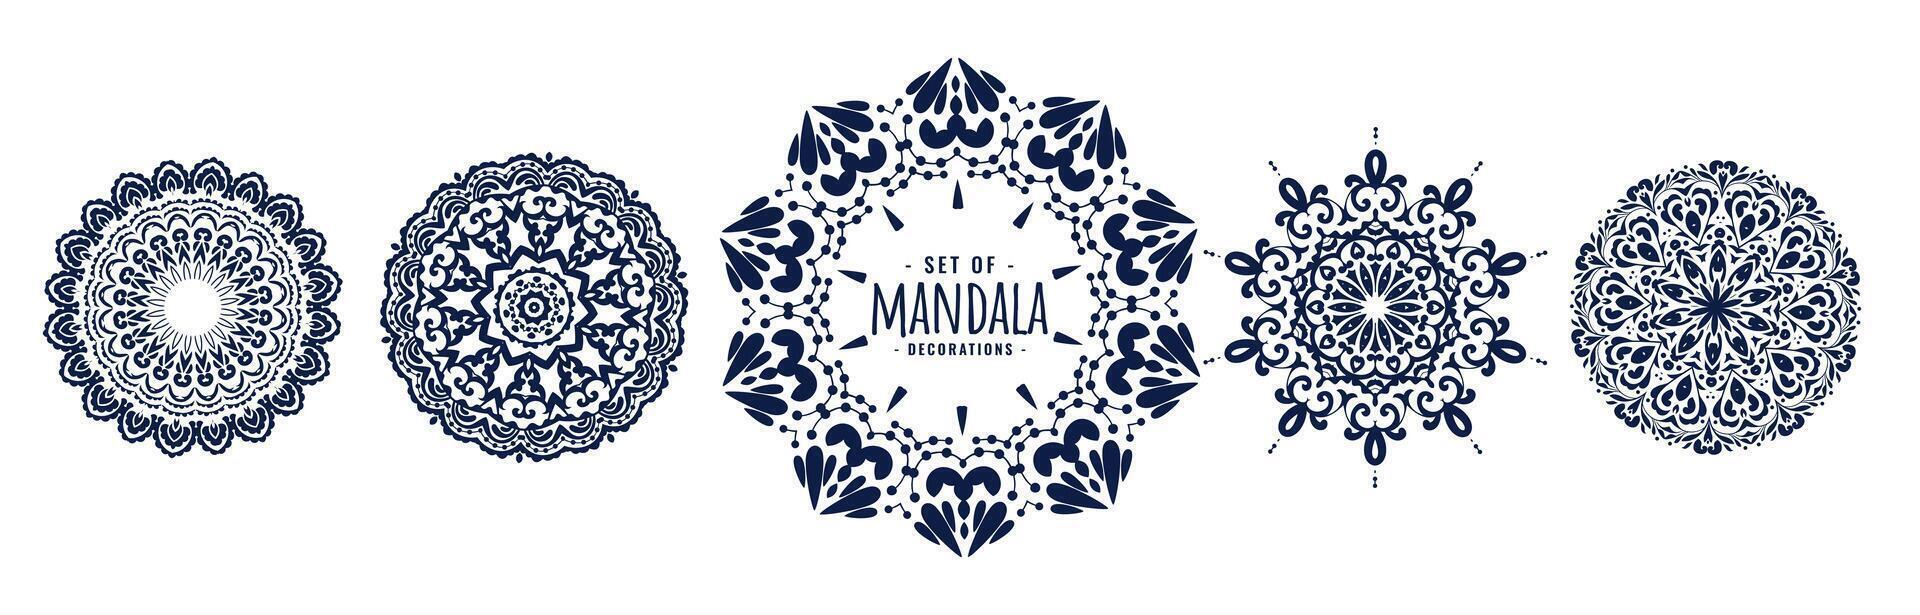 indian or arabic style mandala patterns set vector